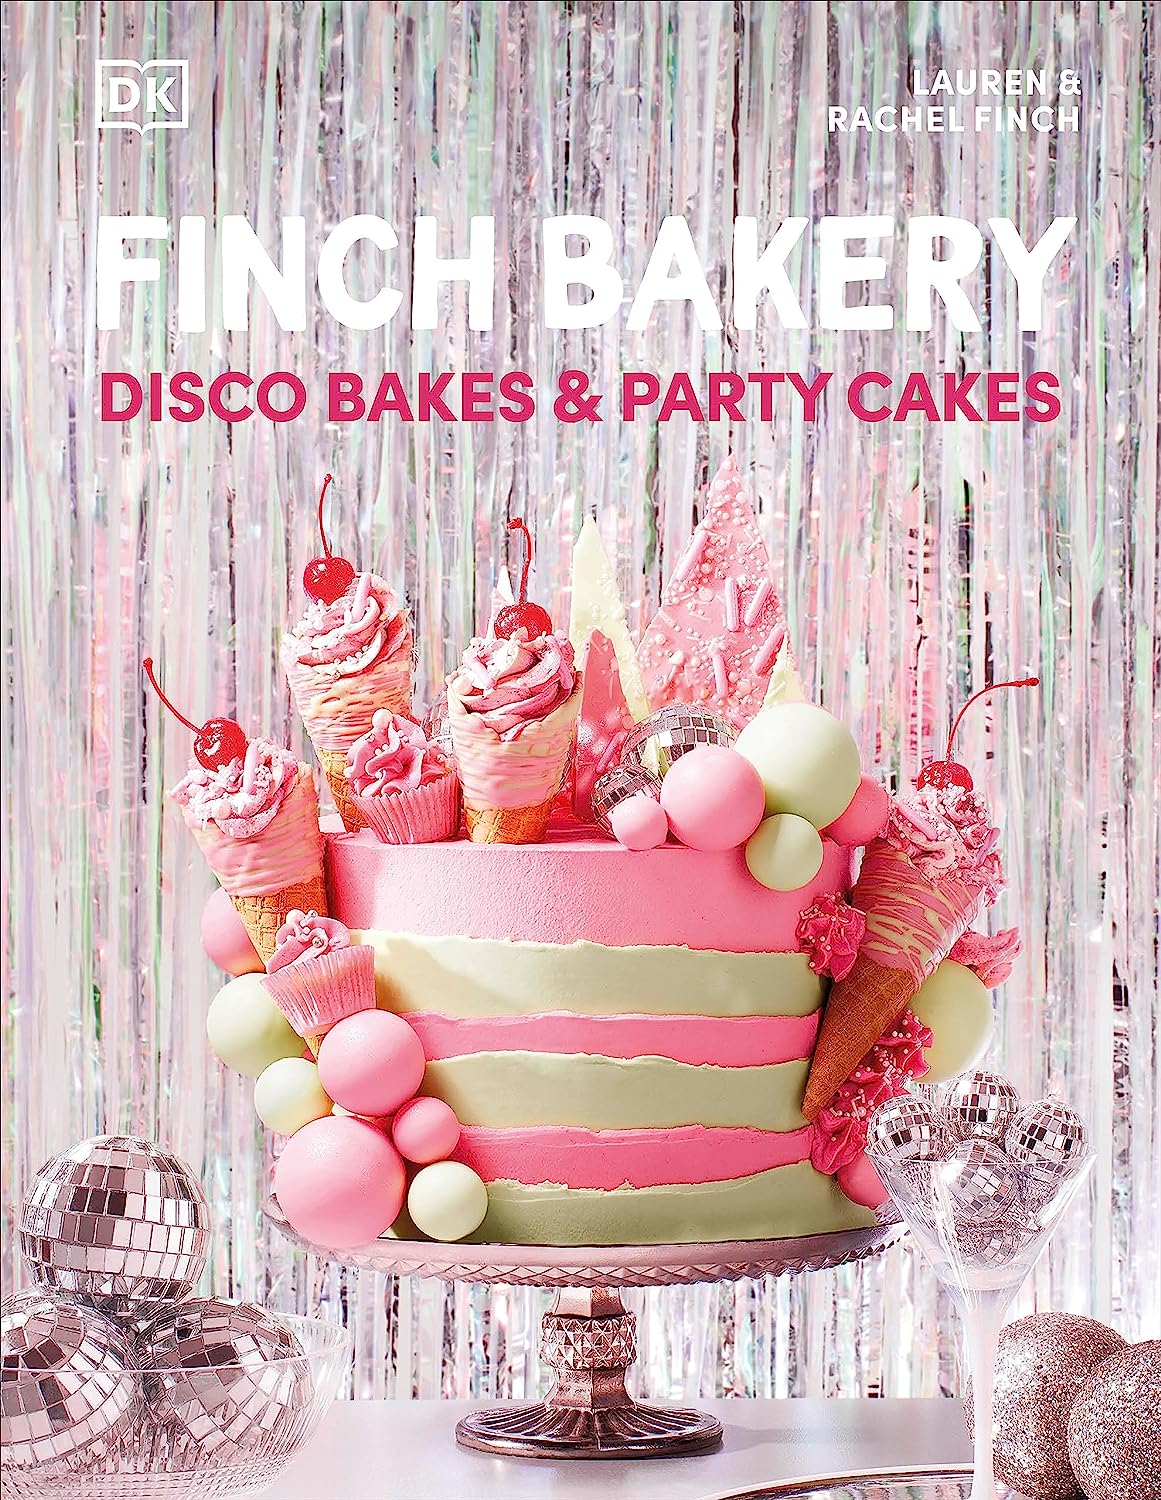 Finch Bakery Disco Bakes and Party Cakes | Lauren Finch, Rachel Finch